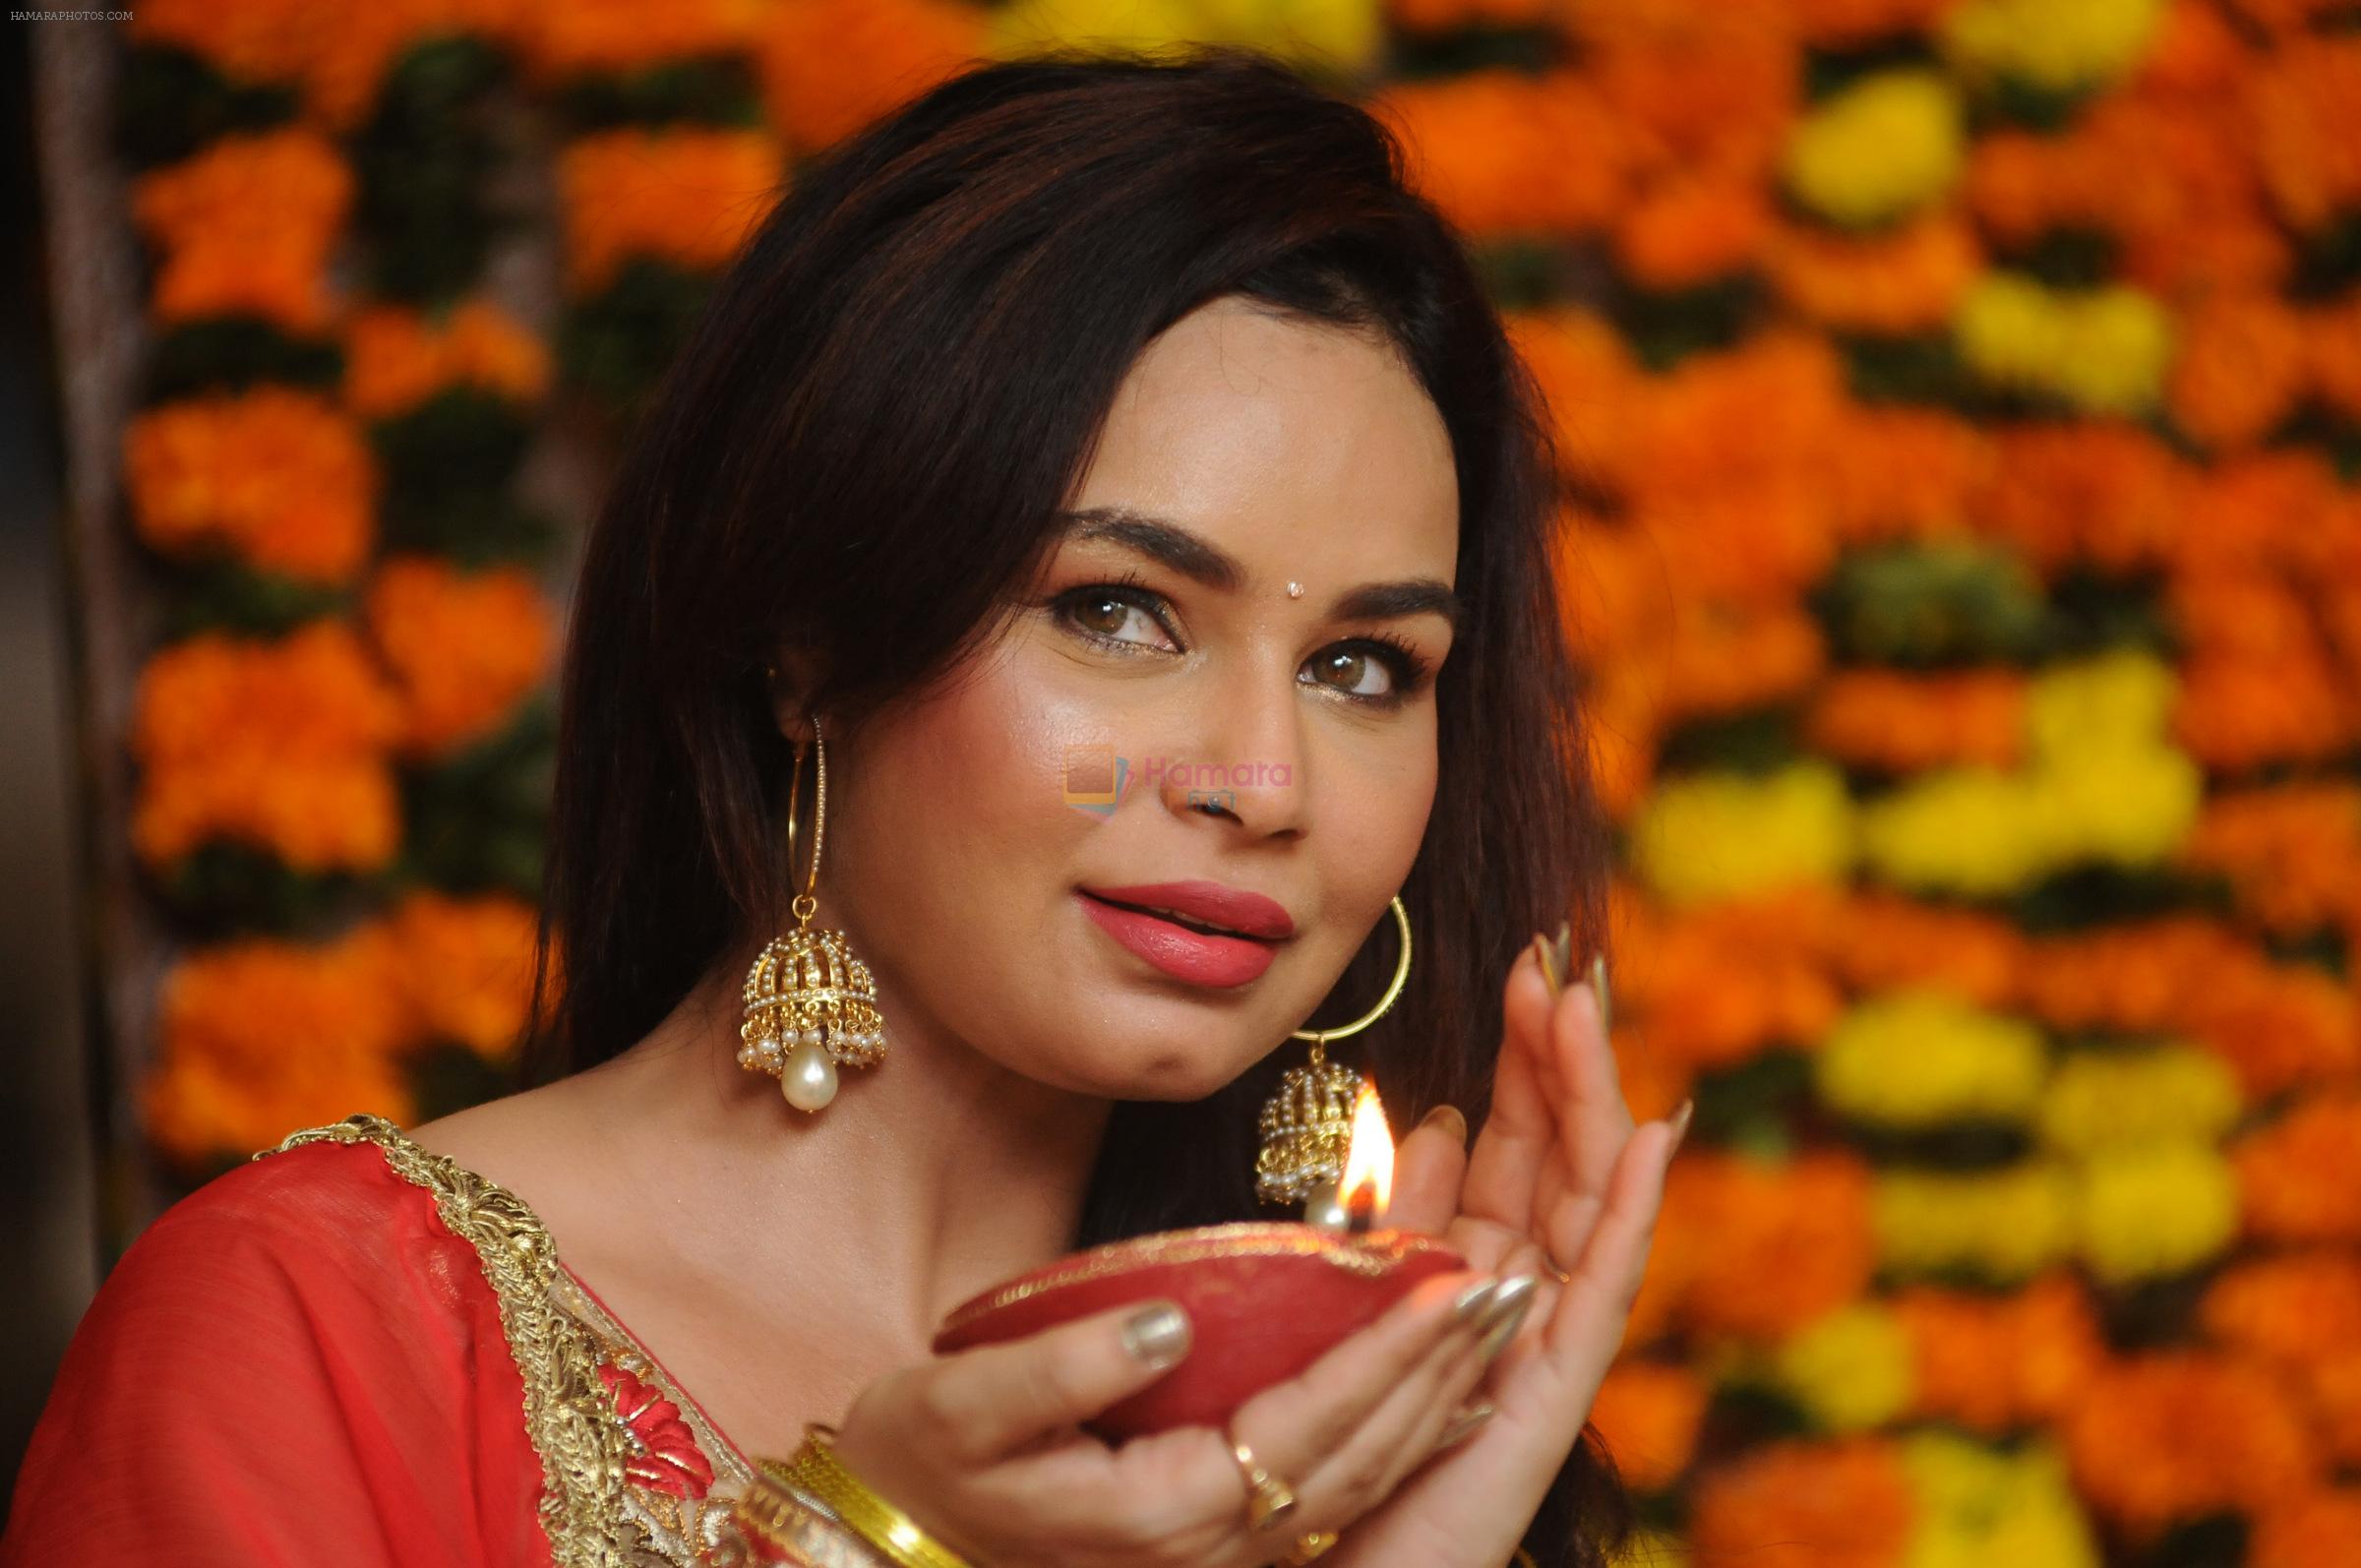 Kavitta Verma caught in candid celebrating Indian festival DIWALI on 21st Oct 2014